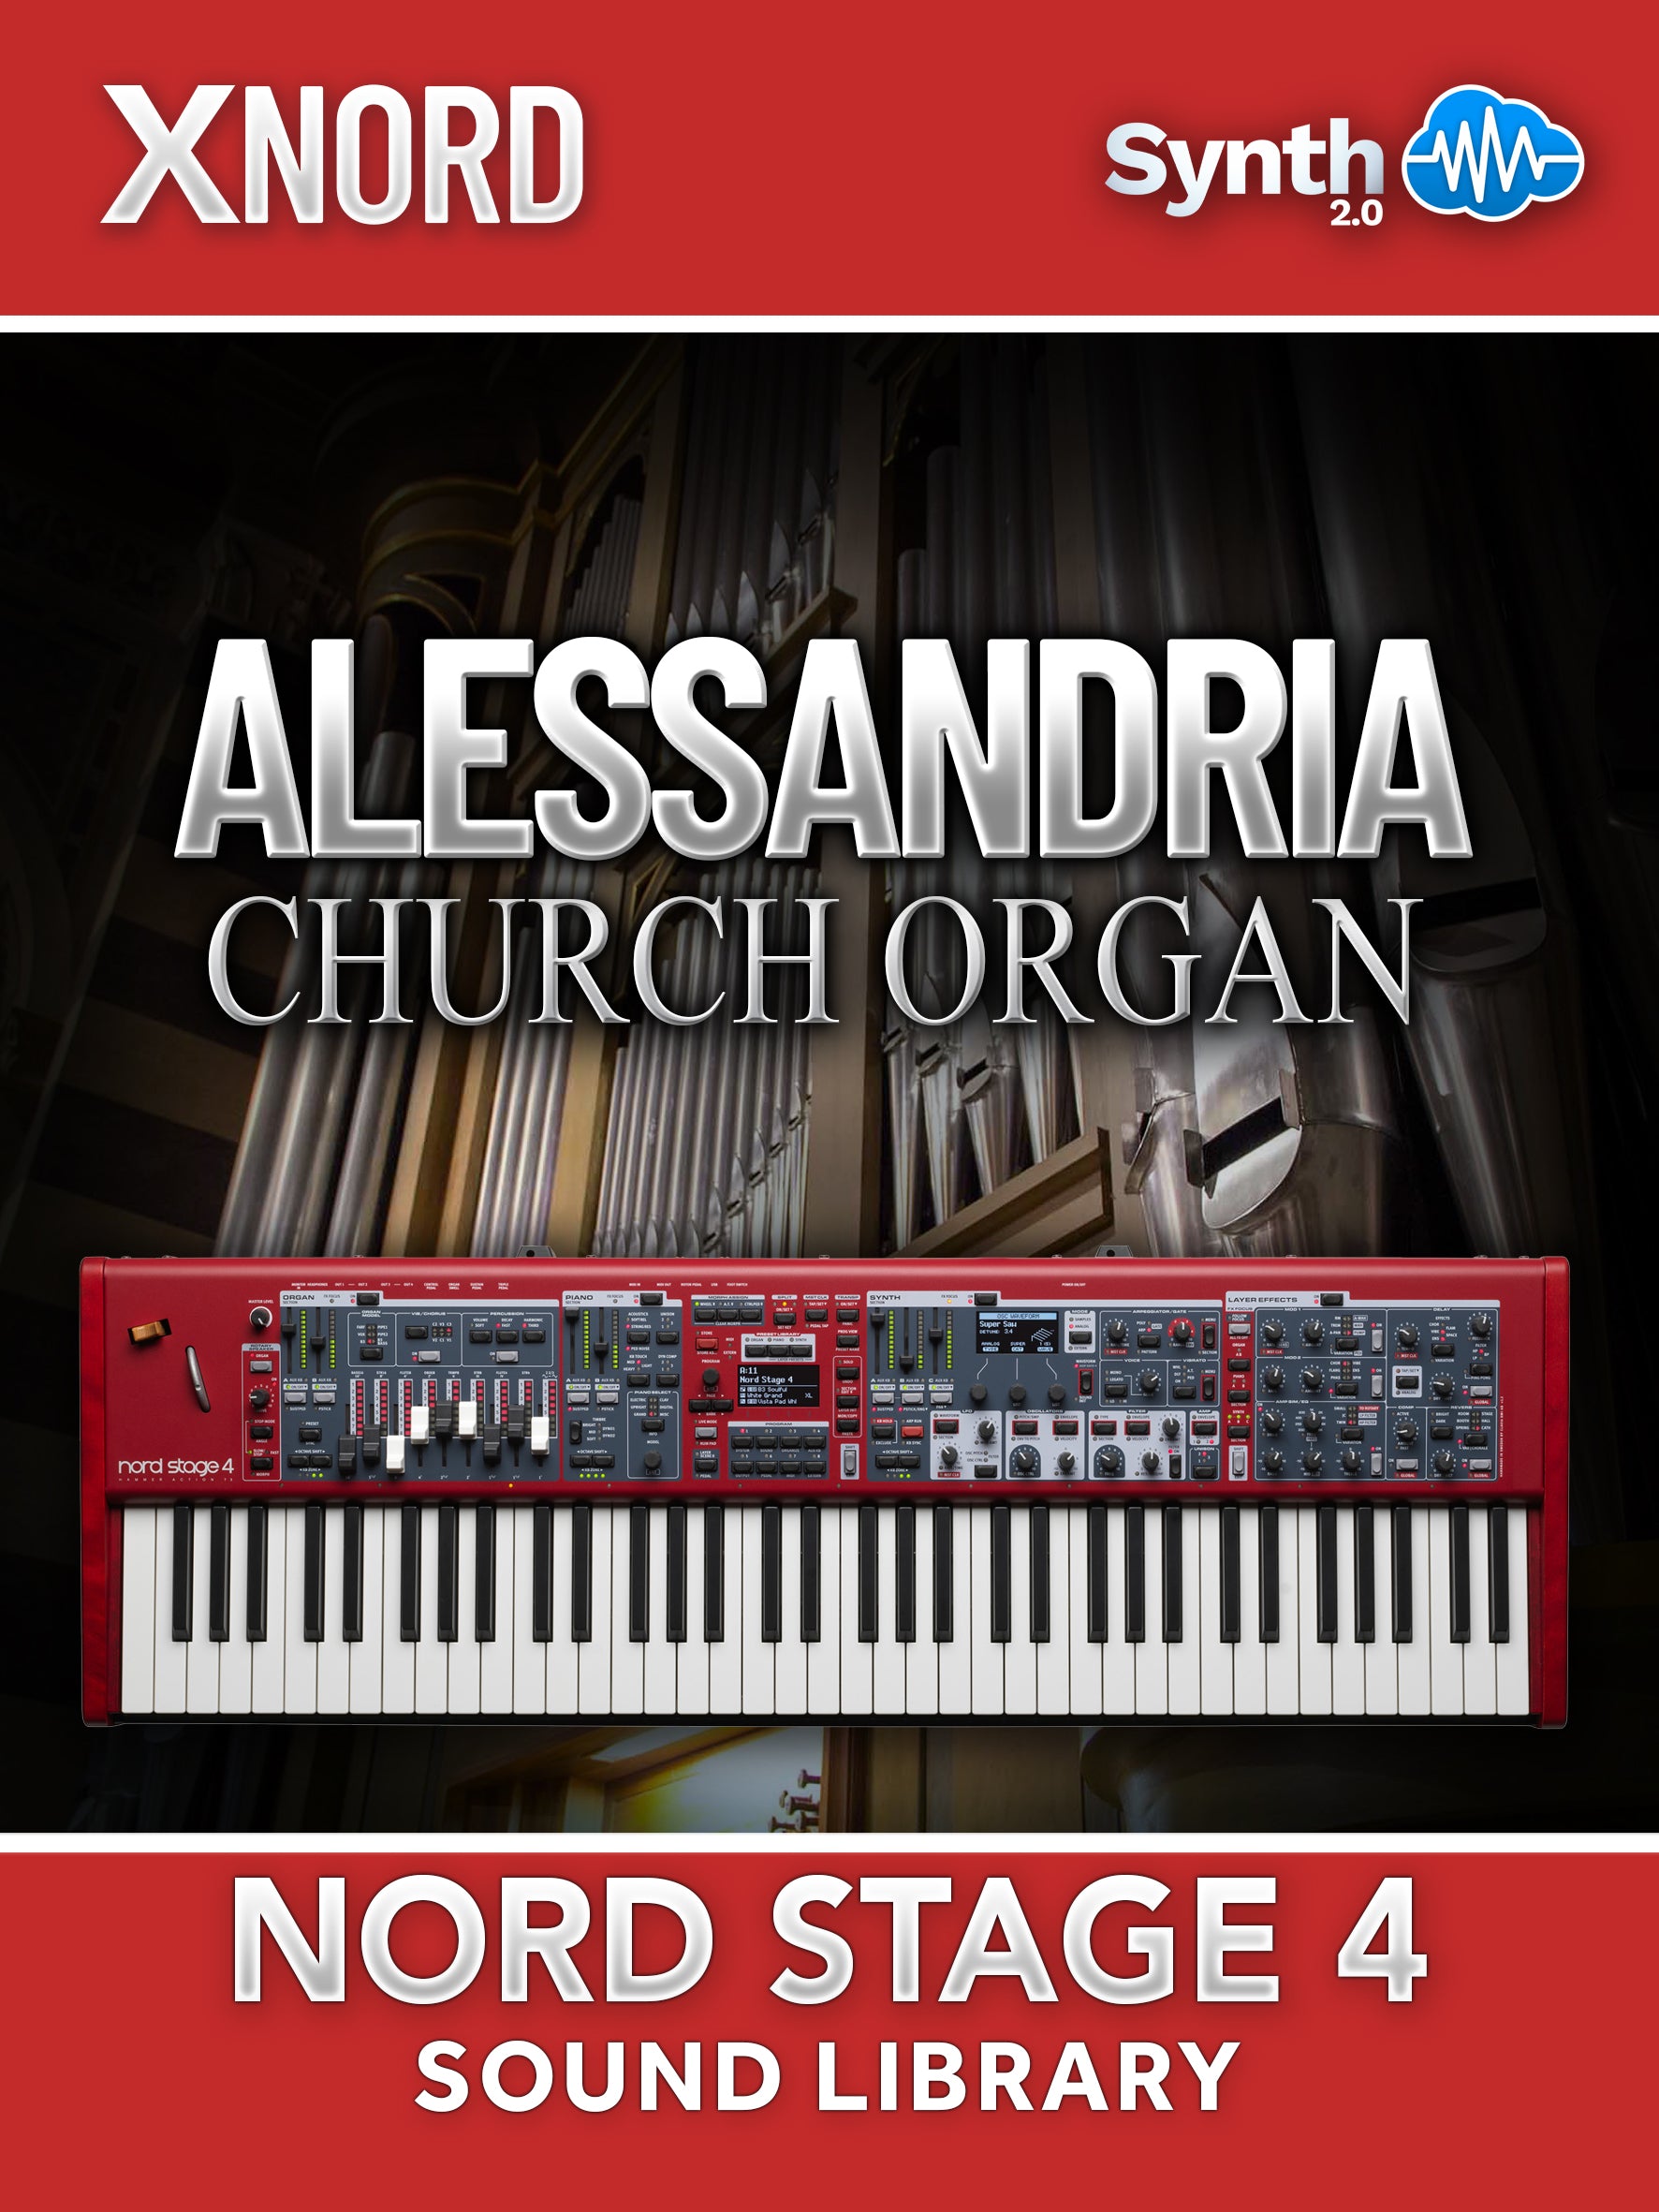 RCL014 - ( Bundle ) - Alessandria Organ + Ledziny, St. Clement Organ - Nord Stage 4